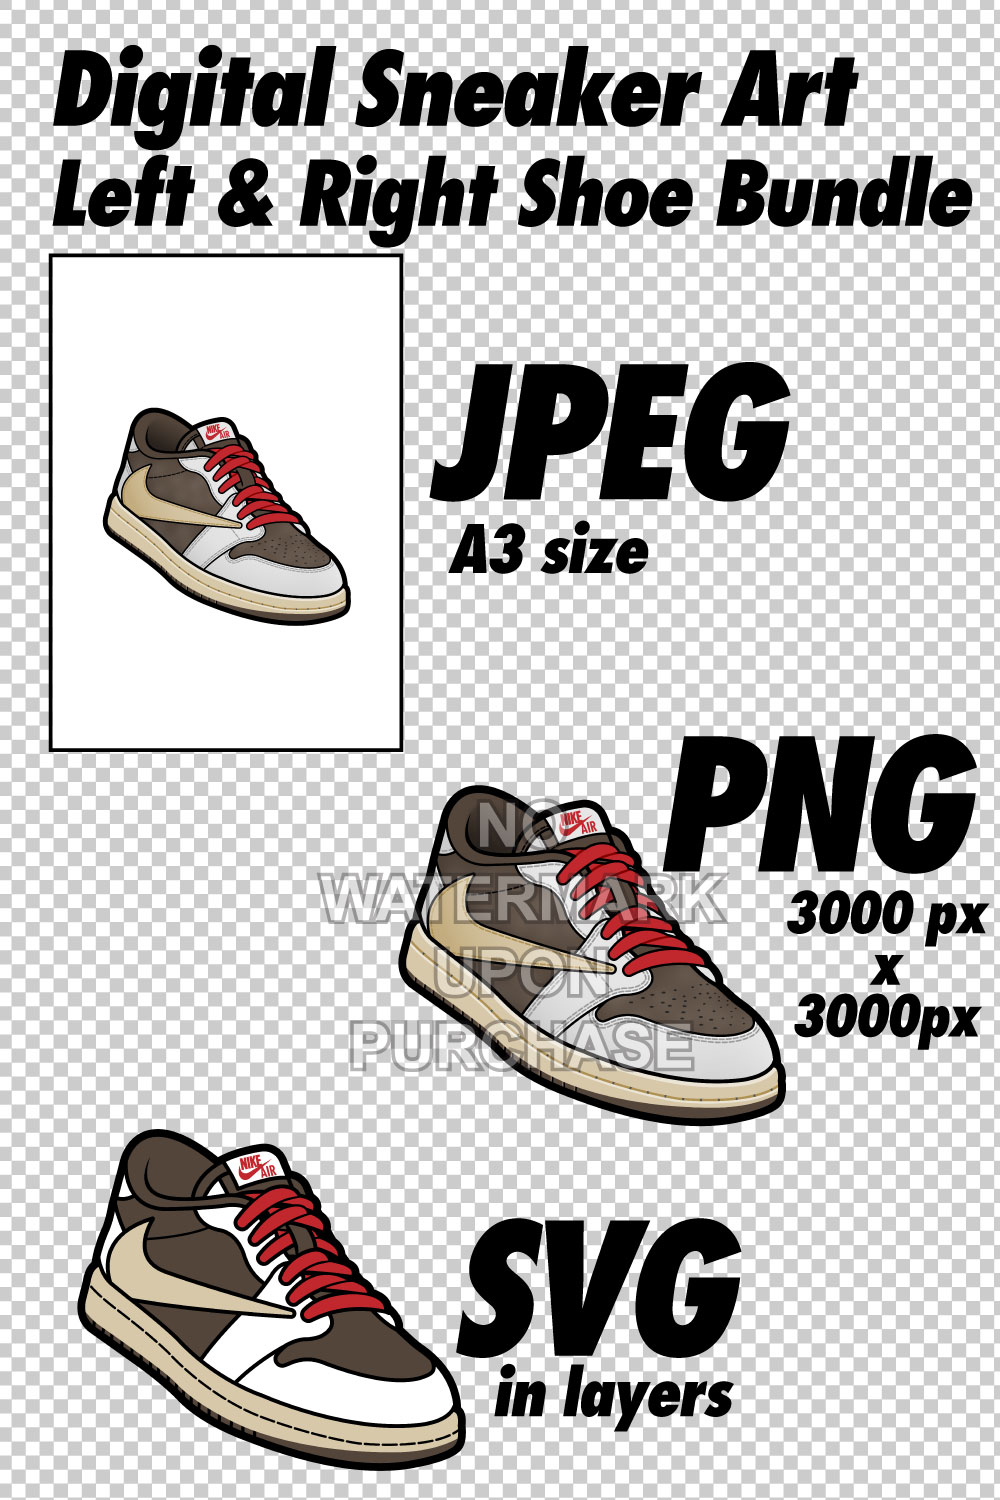 Air Jordan 1 Low Travis Scott Reverse Mocha JPEG PNG SVG Sneaker Art Right & Left Shoe Bundle pinterest preview image.